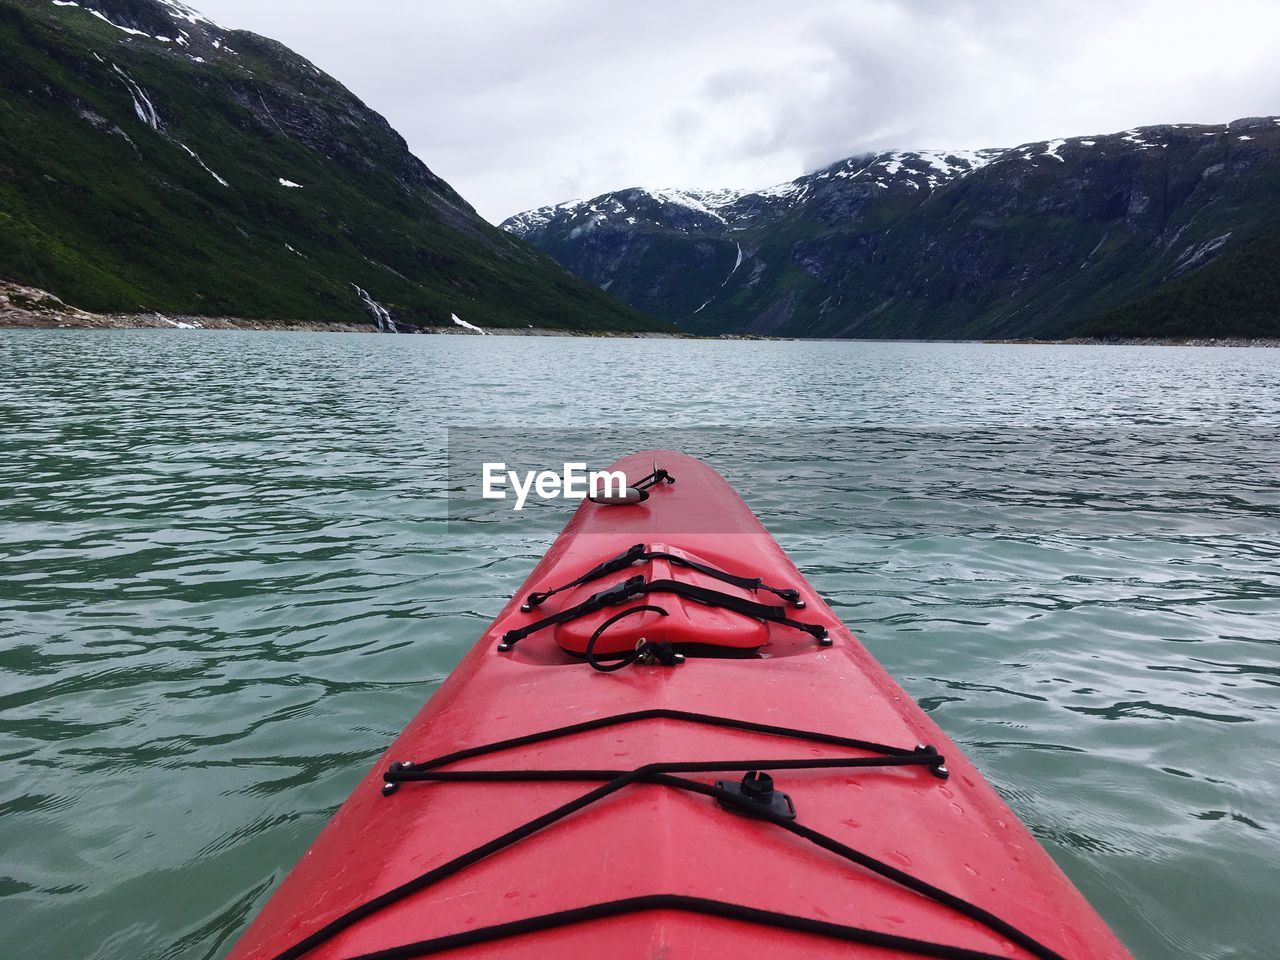 Close-up of kayak on lake against mountains